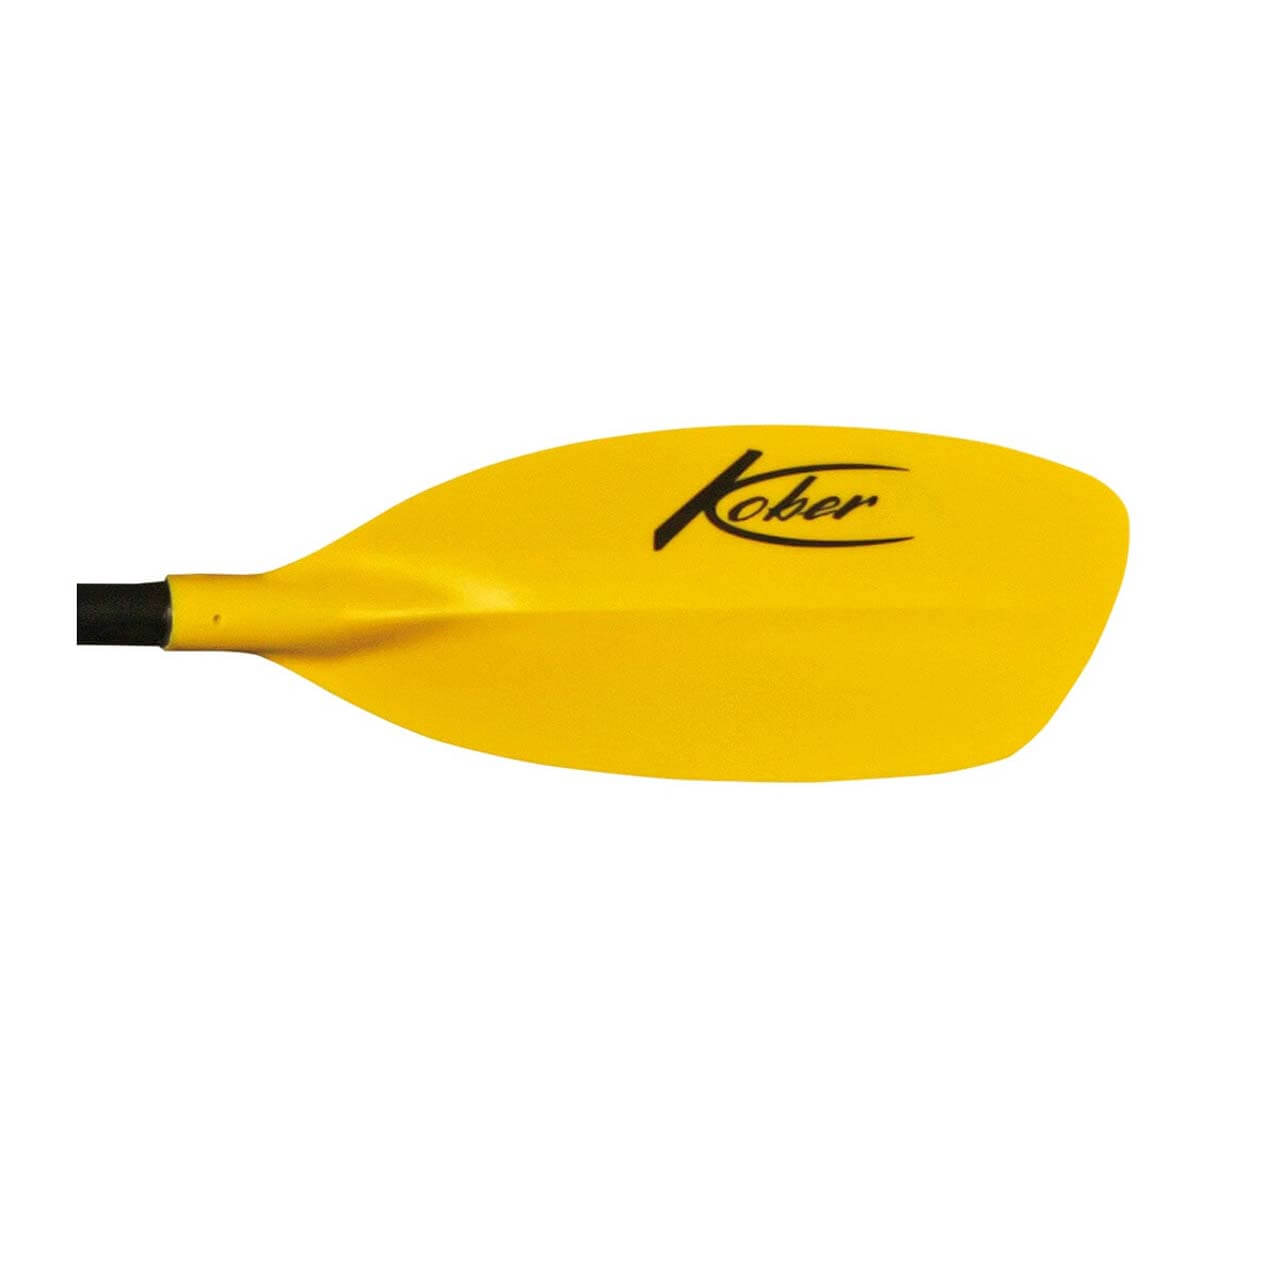 Kober Speedy Kinderpaddel GFK-Schaft - gelb, 170cm